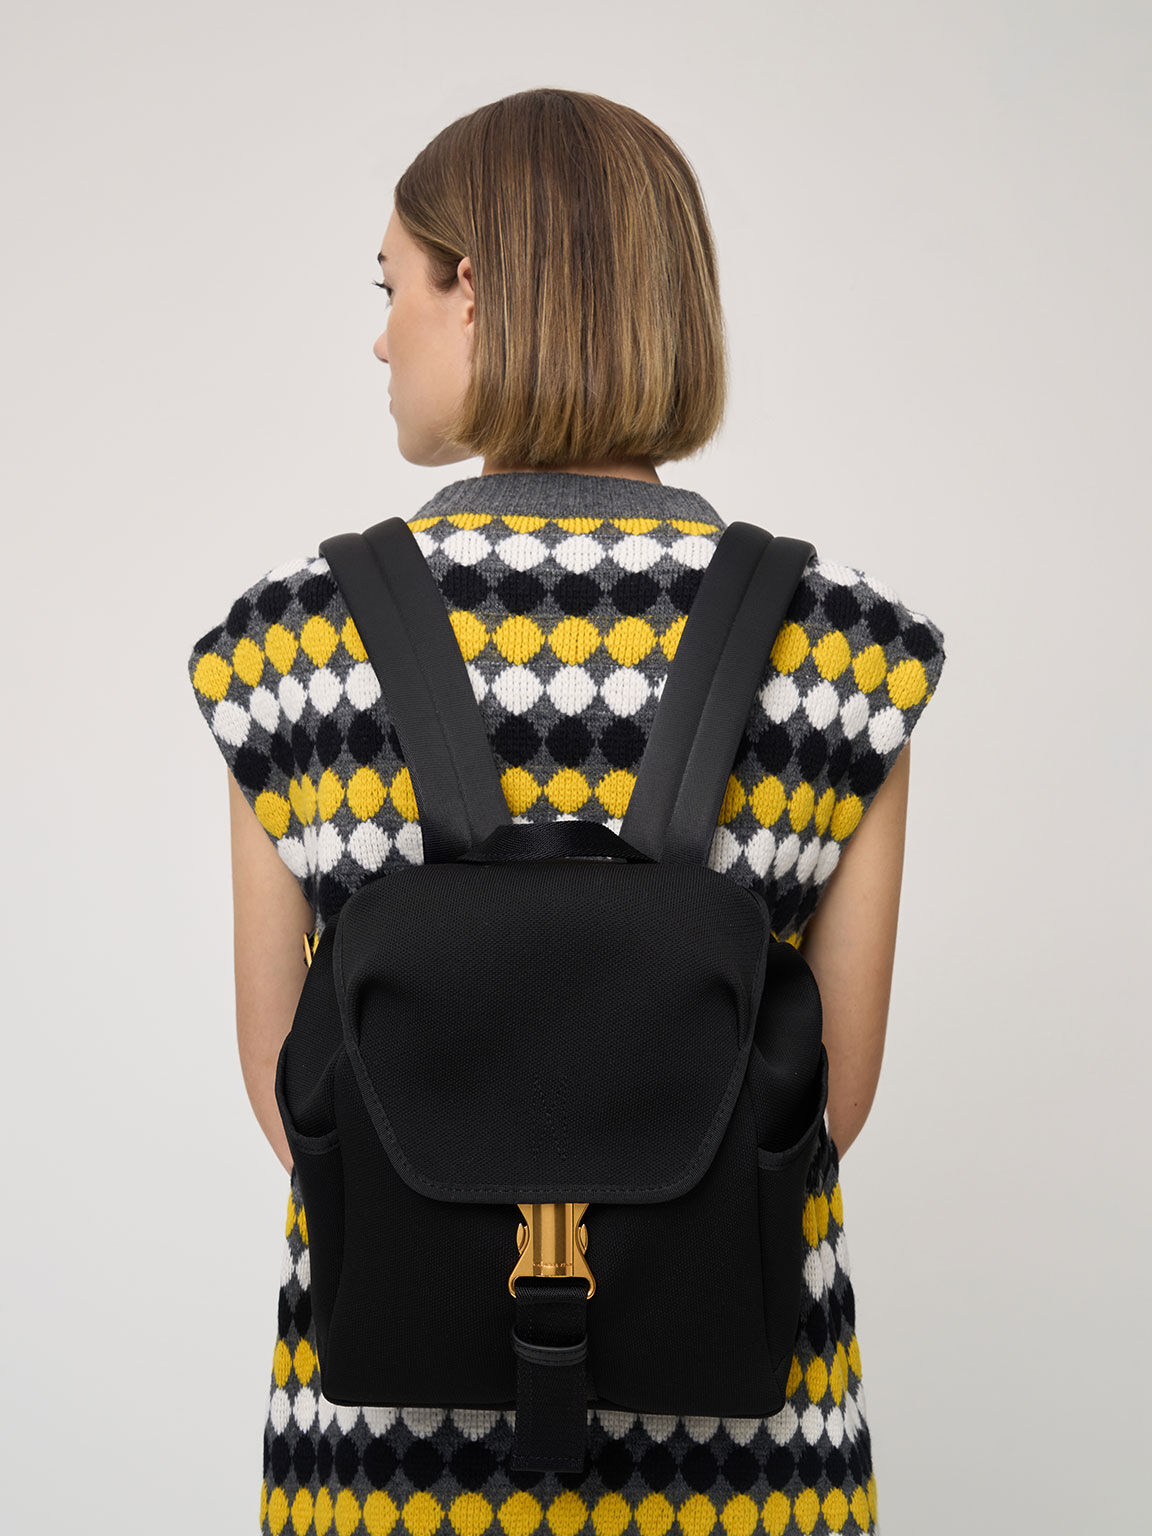 Knit & Nylon Metallic Buckle Backpack, Black, hi-res